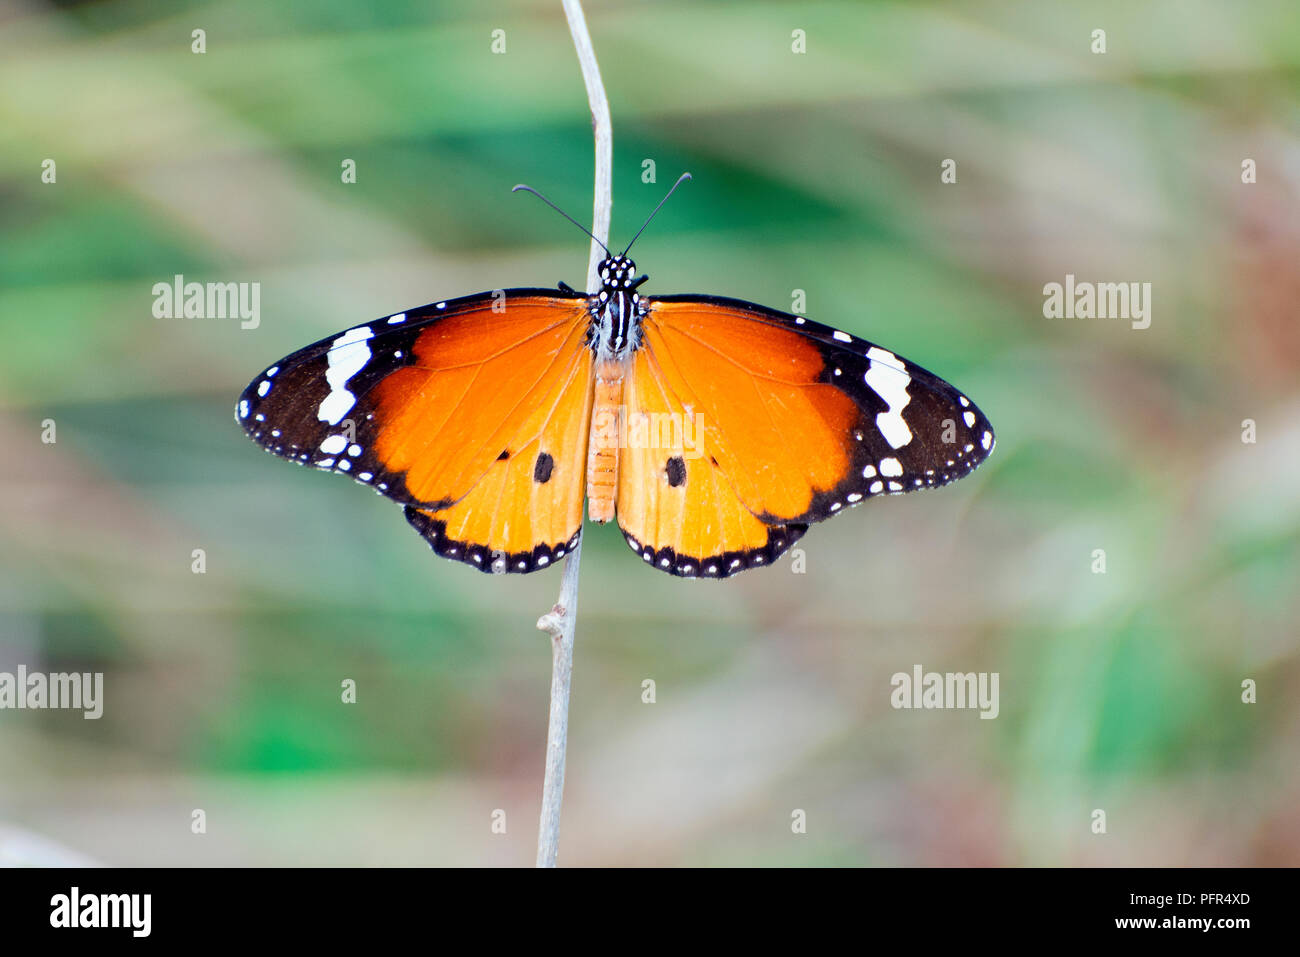 Sri Lanka, Nord provincia centrale, Vavuniya farfalla con ali stese, close-up Foto Stock